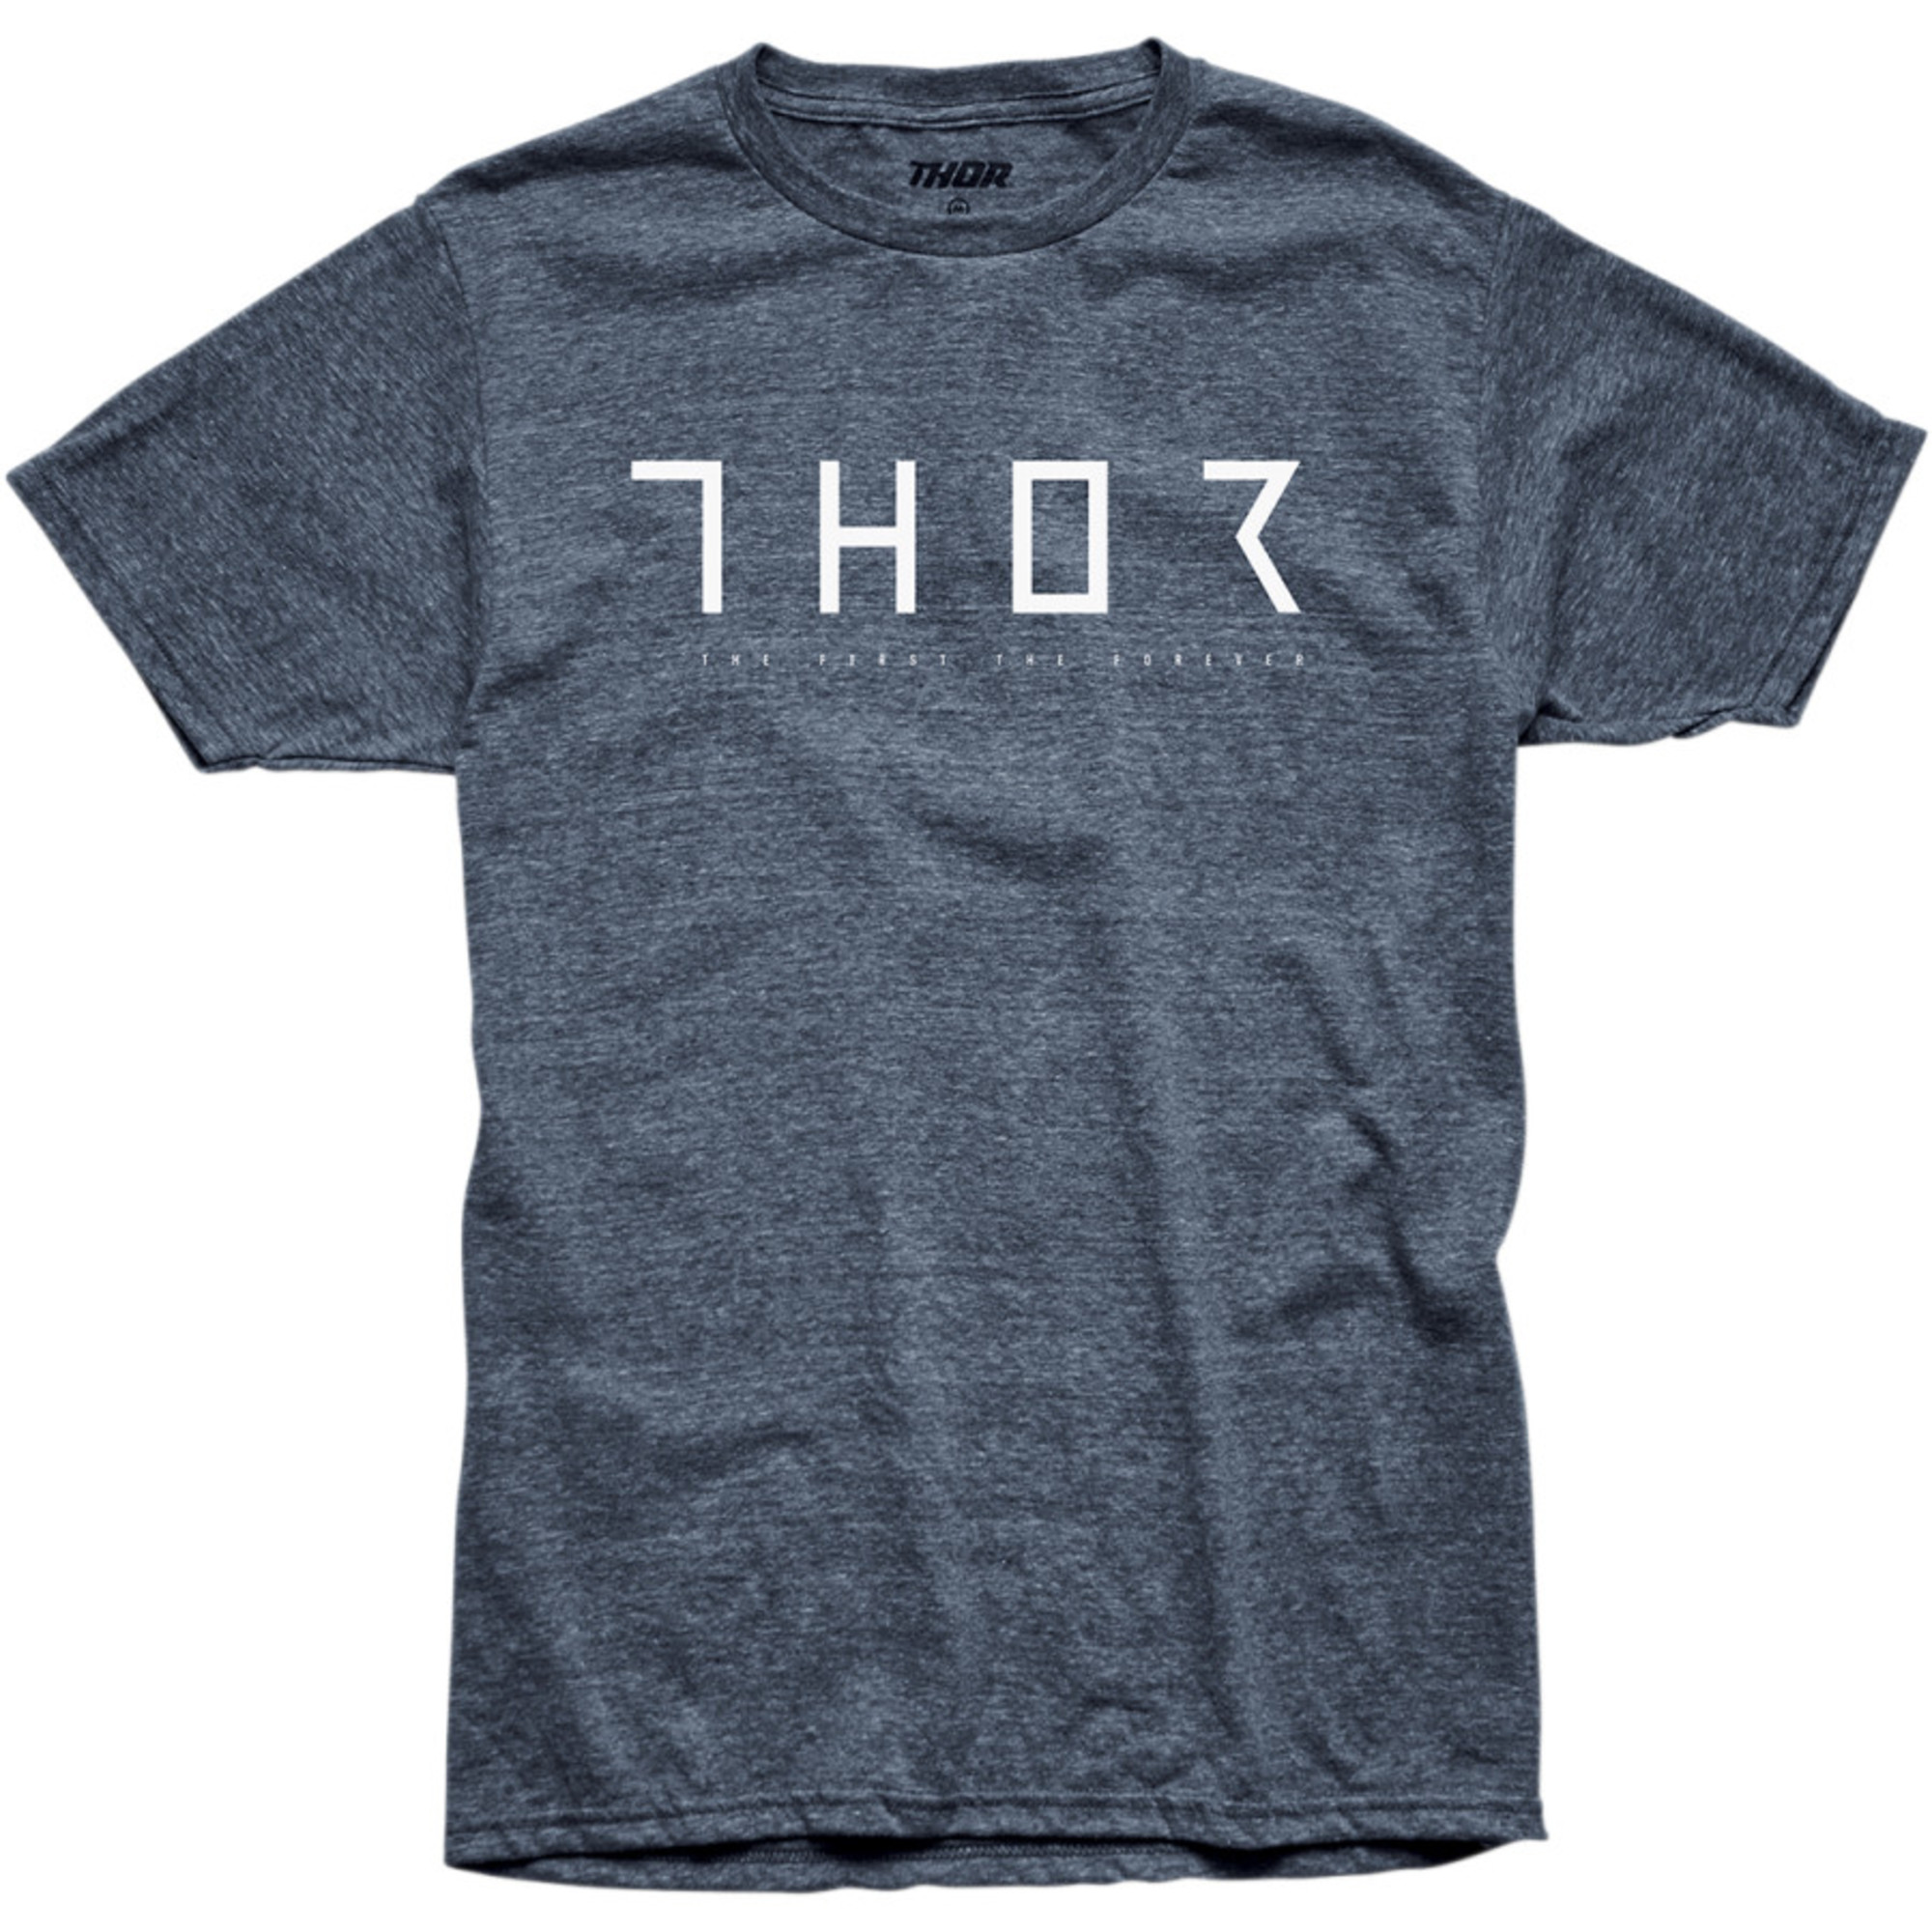 thor t-shirt shirts for men prime